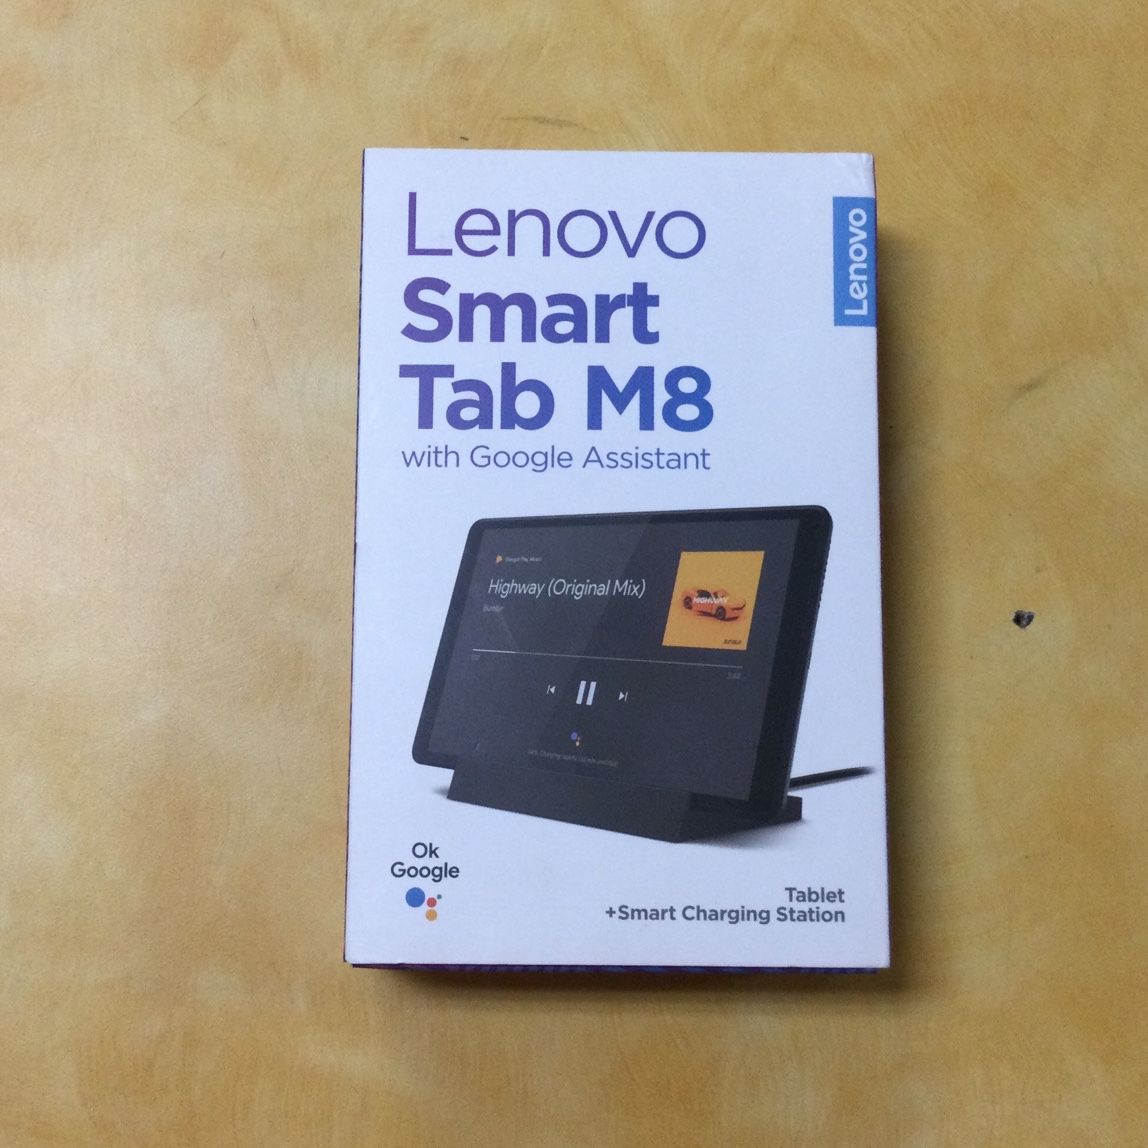 Lenovo Smart Tab M8 - $99.99